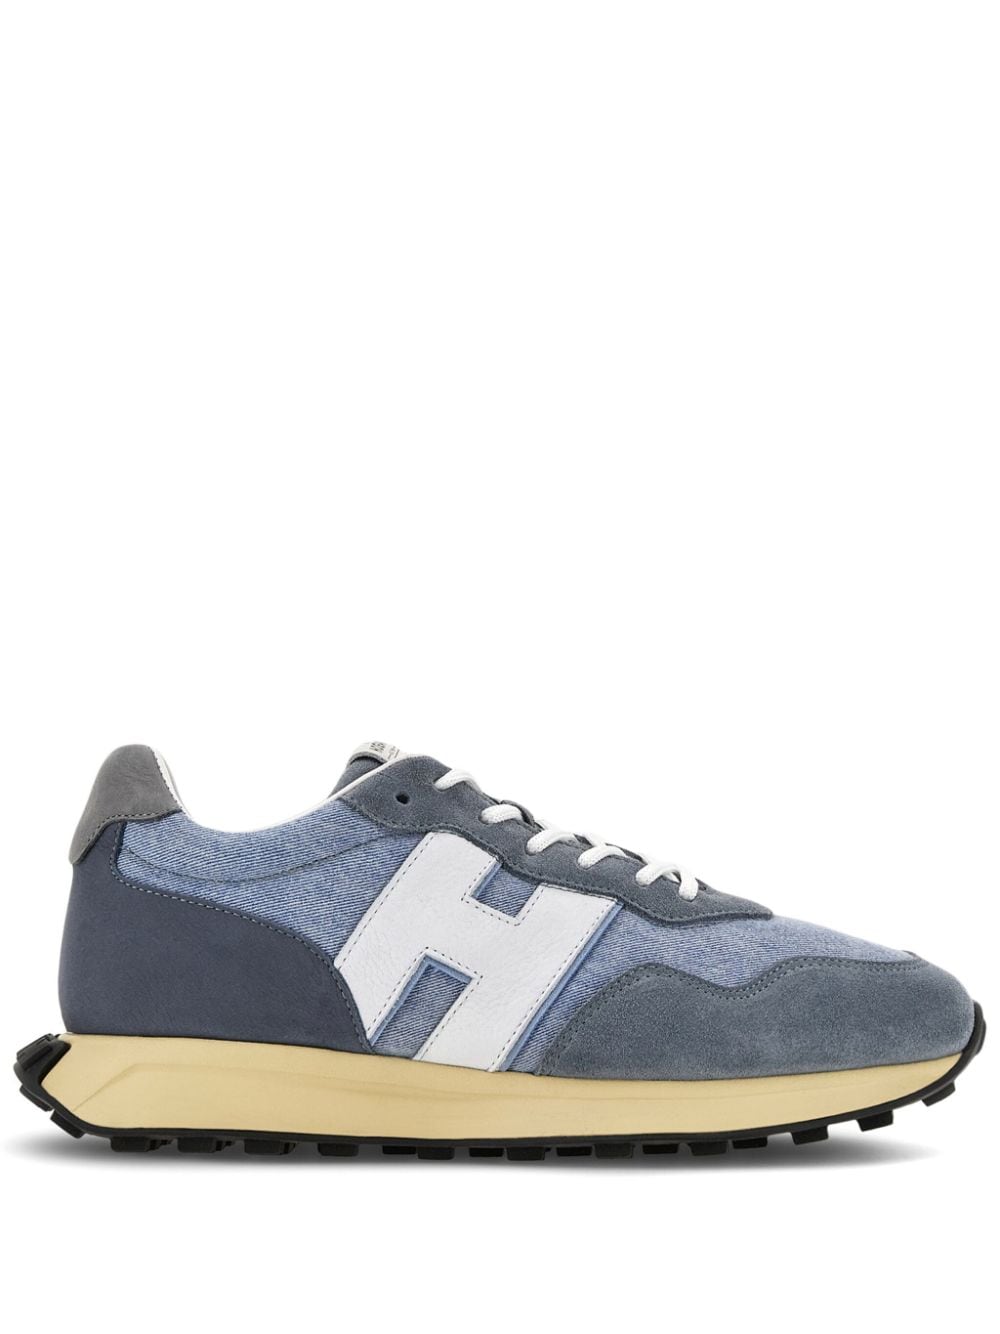 Hogan H601 lace-up suede sneakers - Blue von Hogan